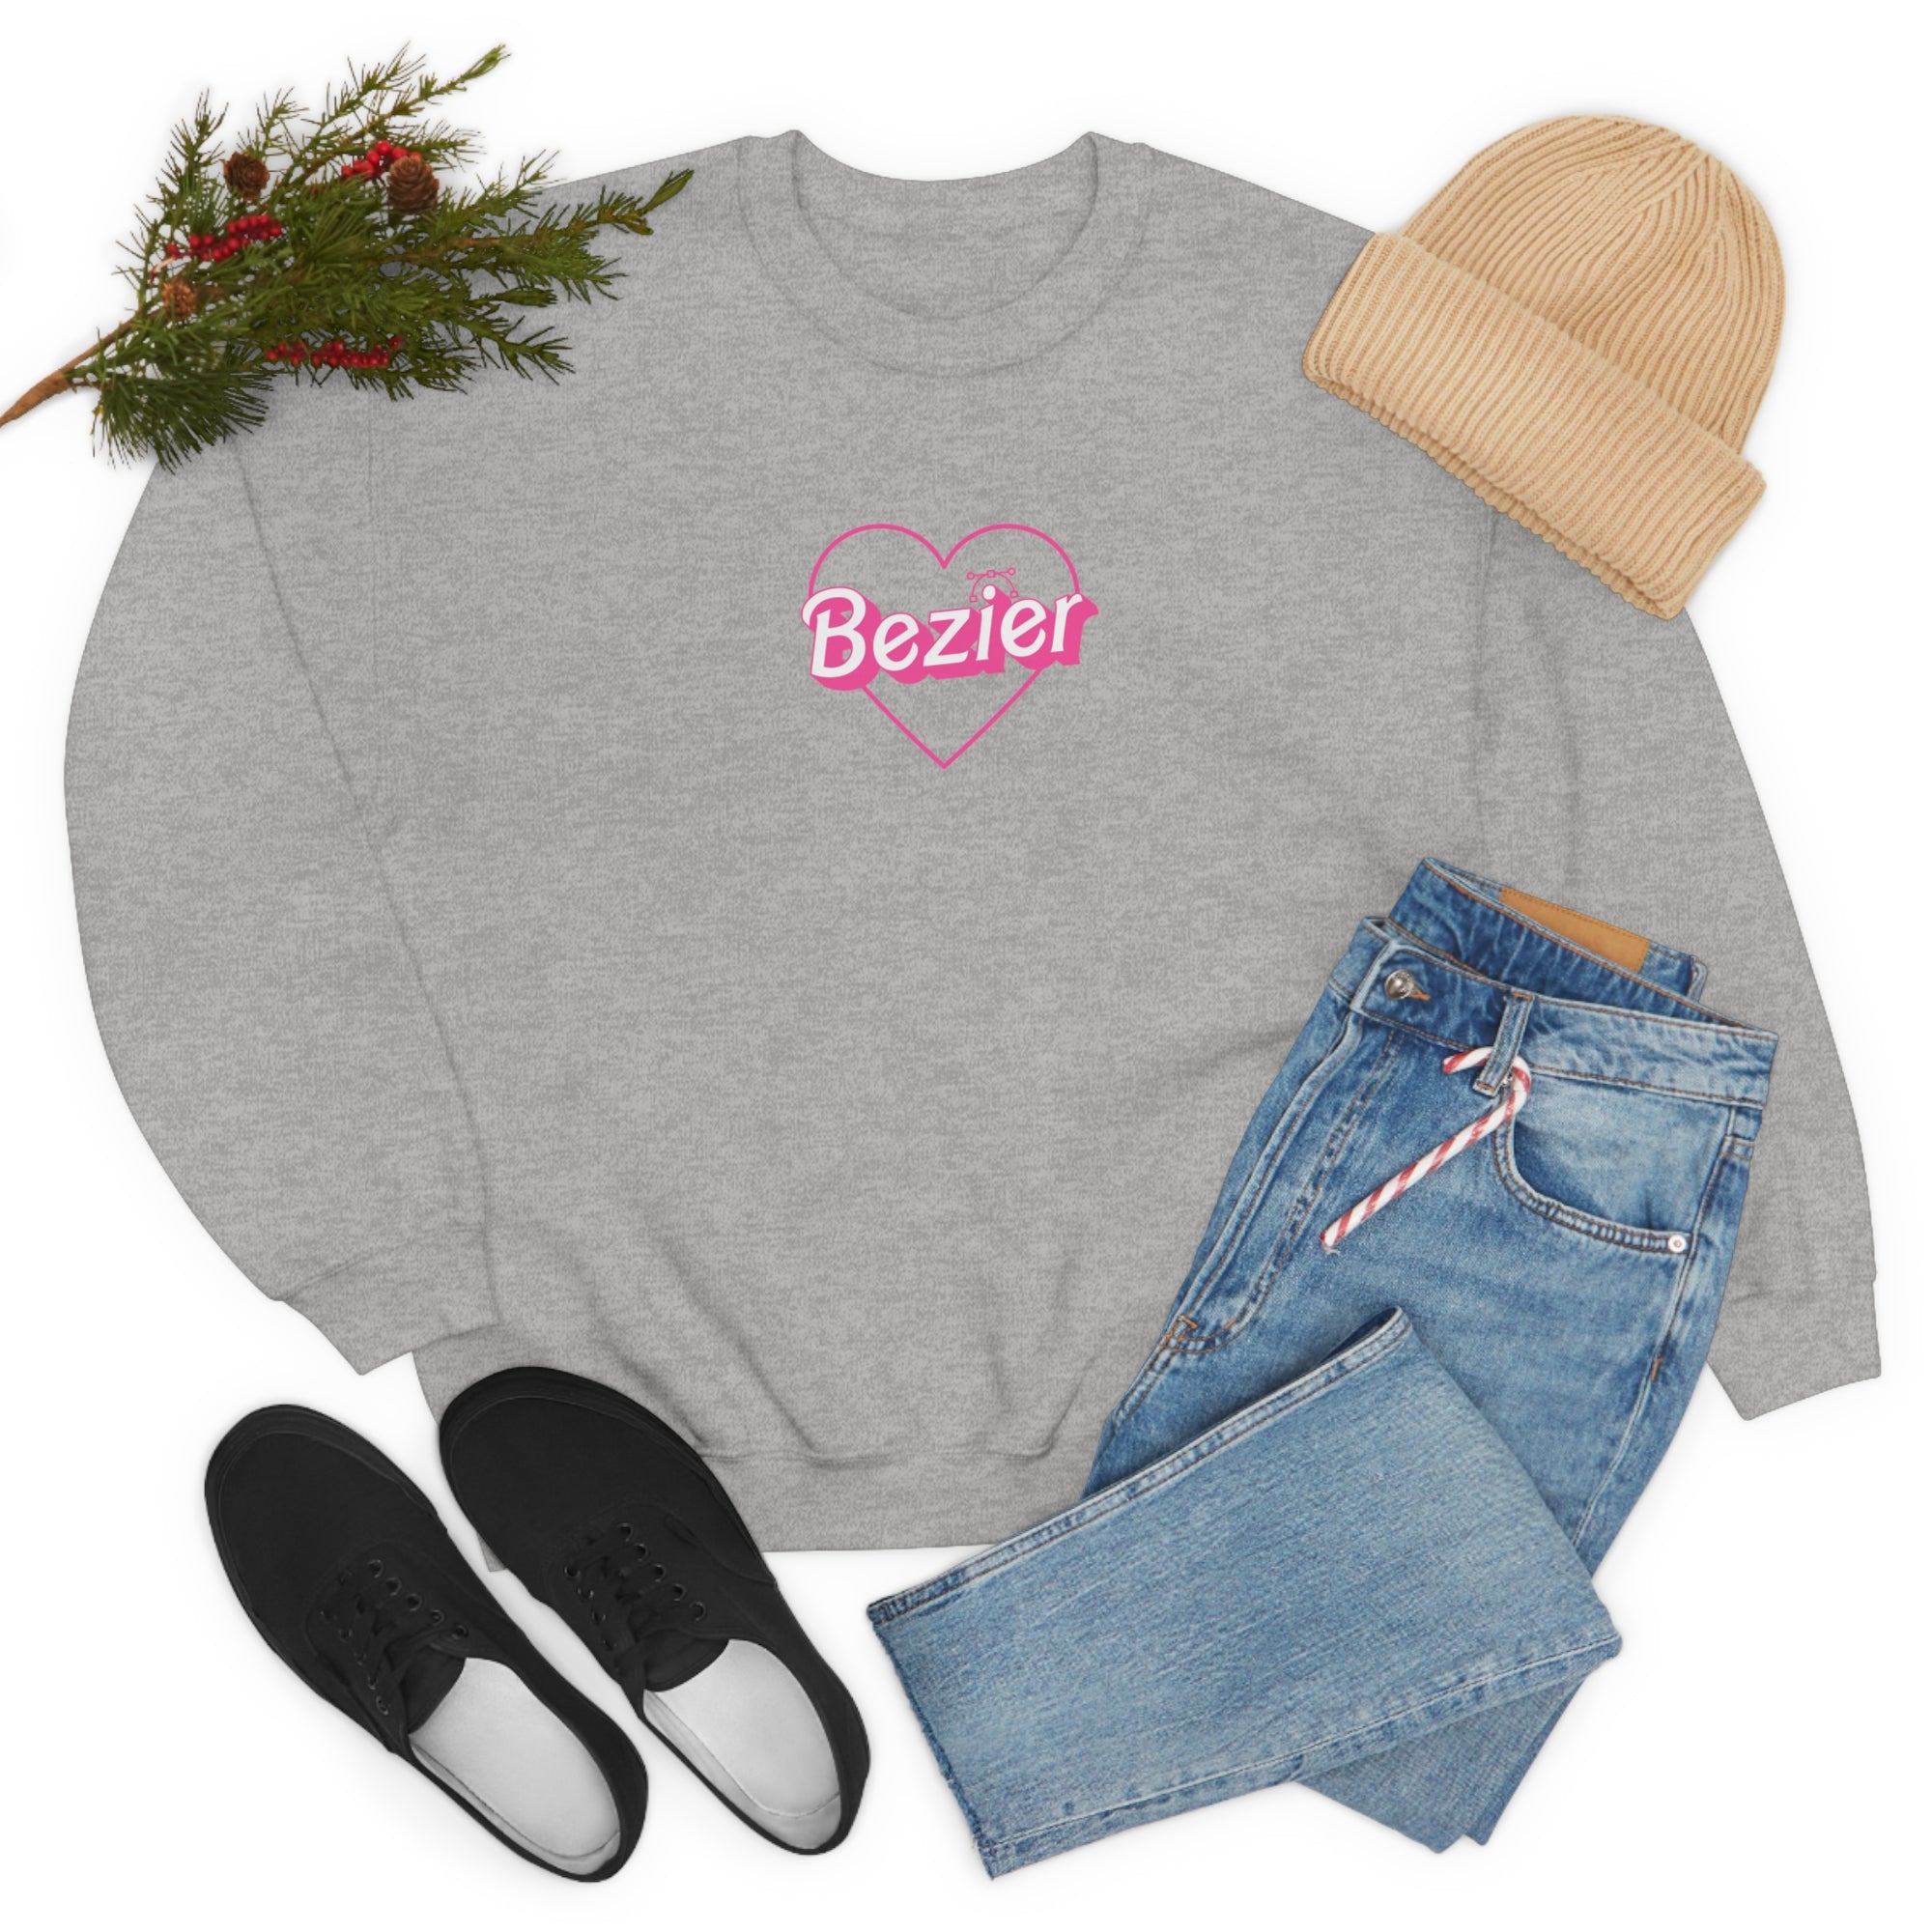 Bezier Girl Crewneck Sweatshirt